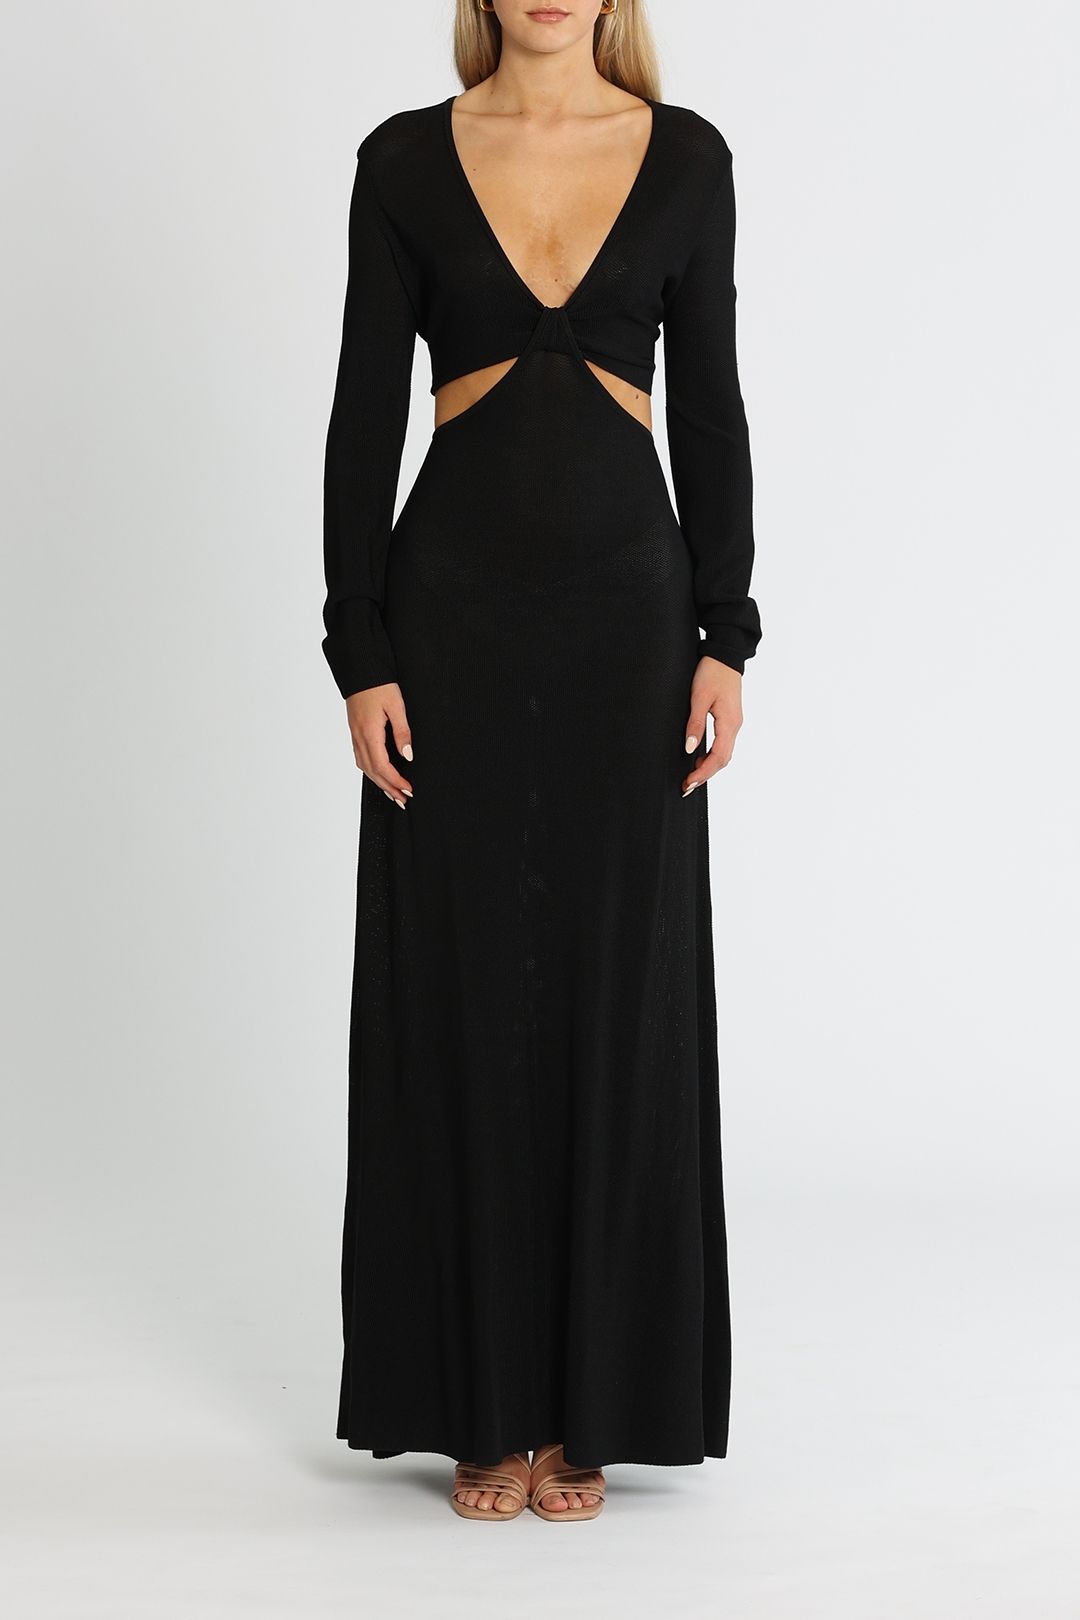 CAMILLA AND MARC - Alvar Knit Dress - Black